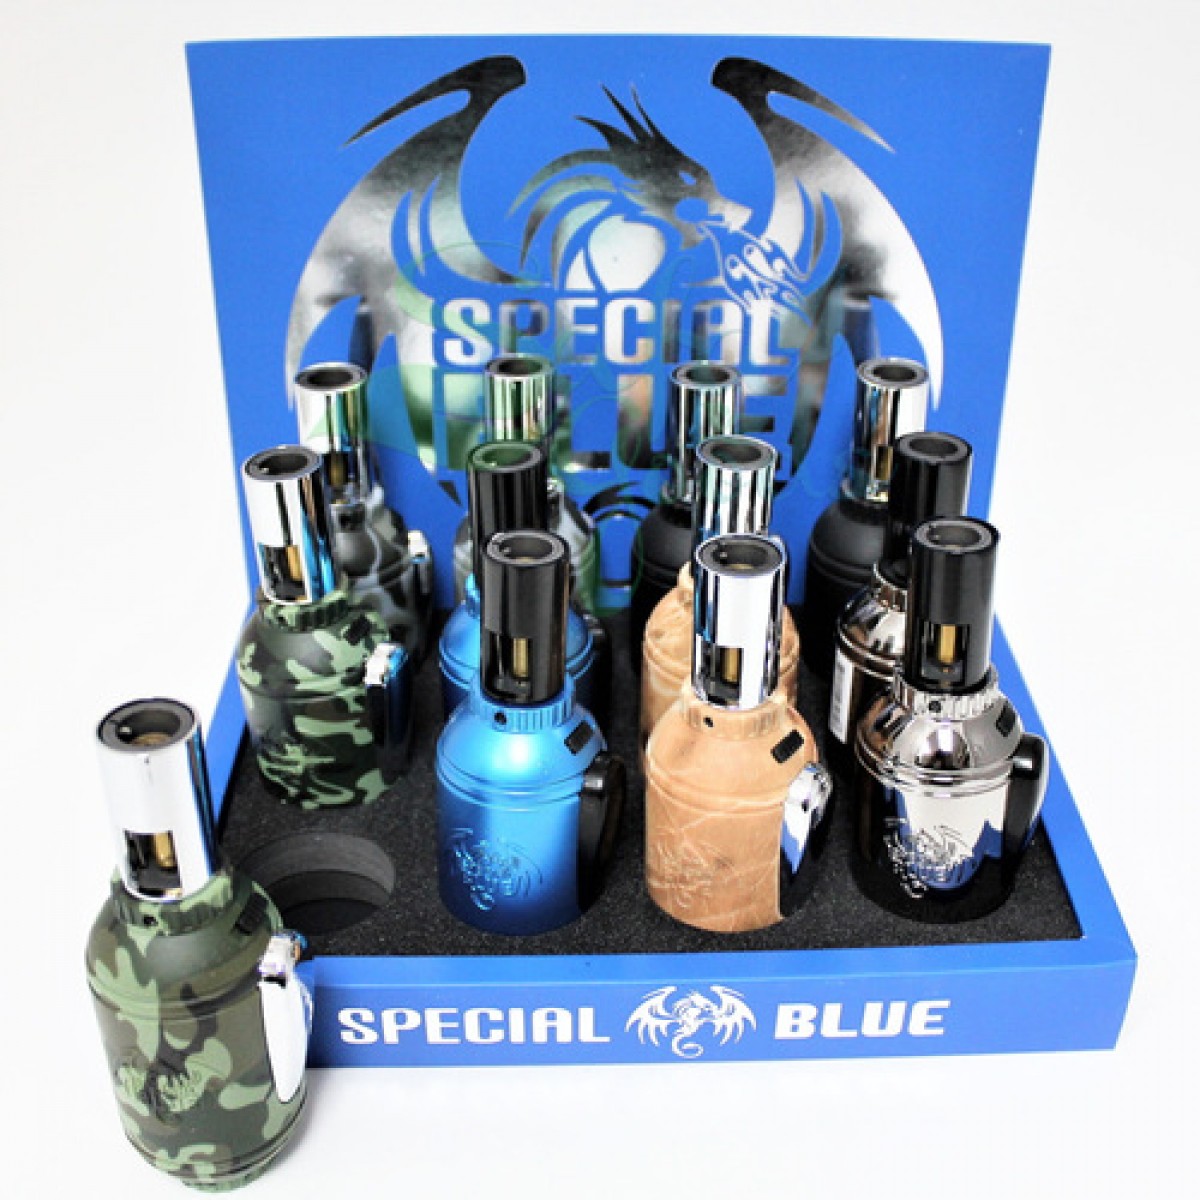 Special Blue - Grenade Lazor Lighter Display - 12PC Display